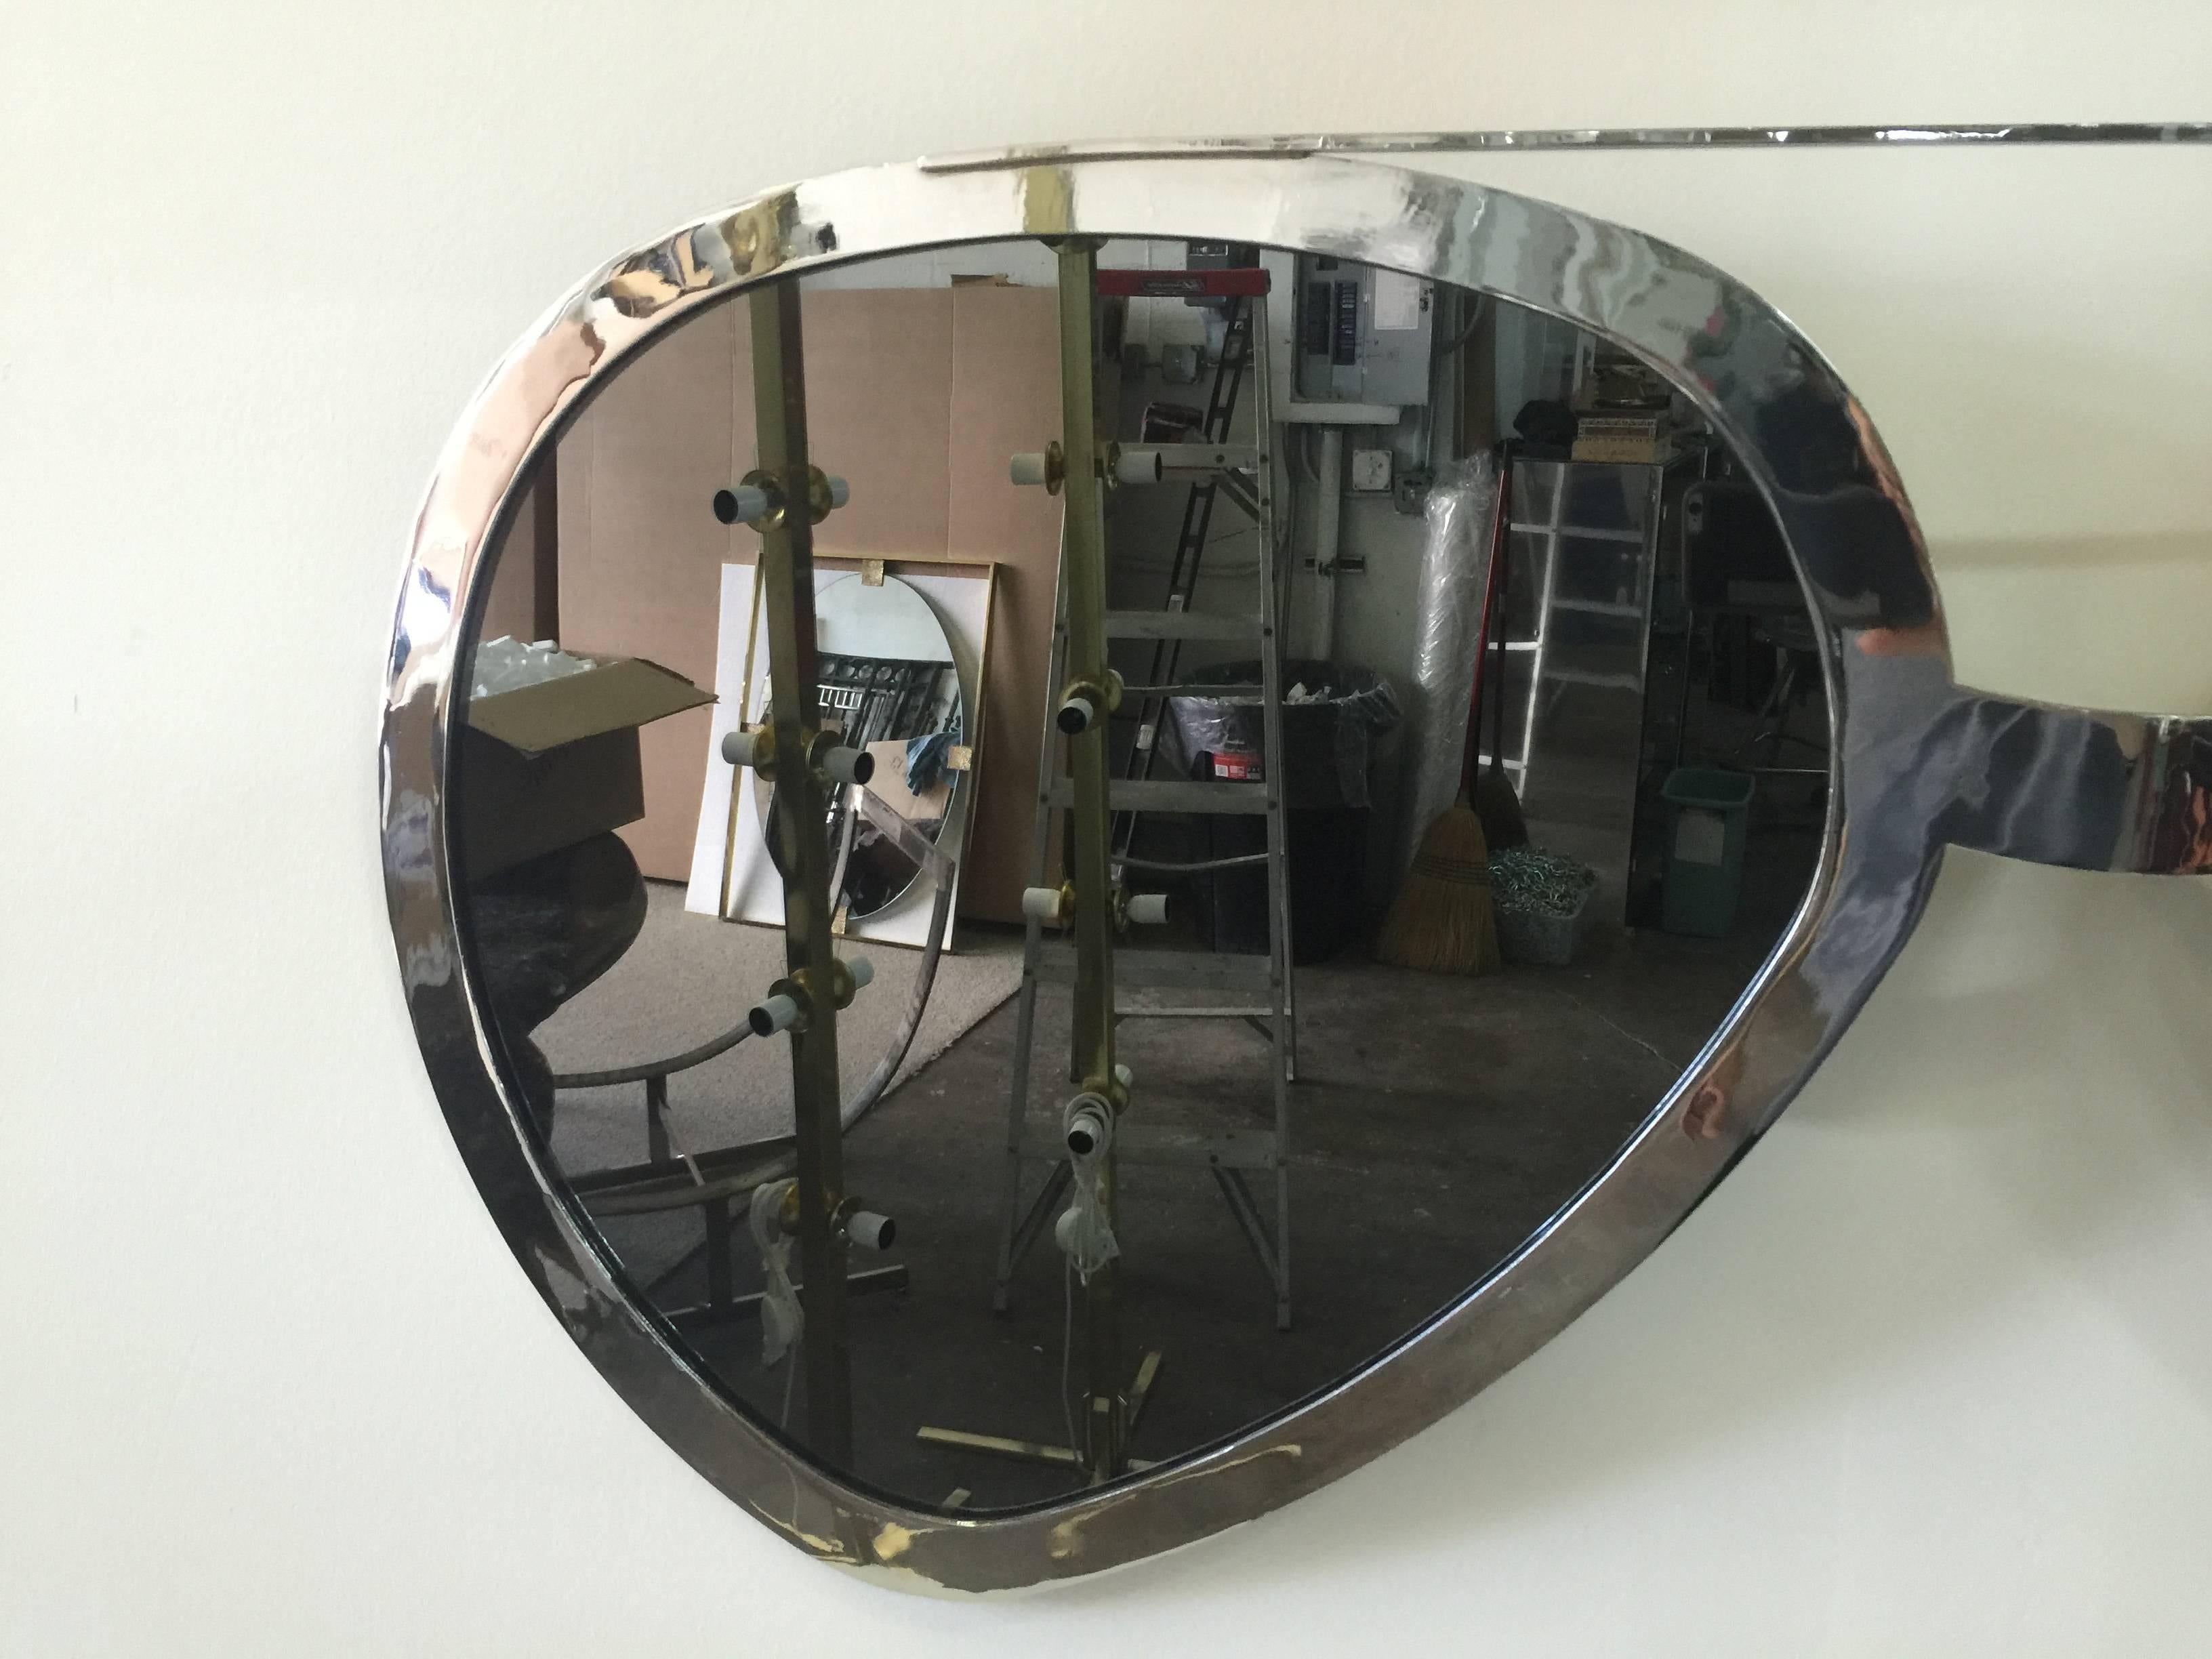 aviator wall mirror